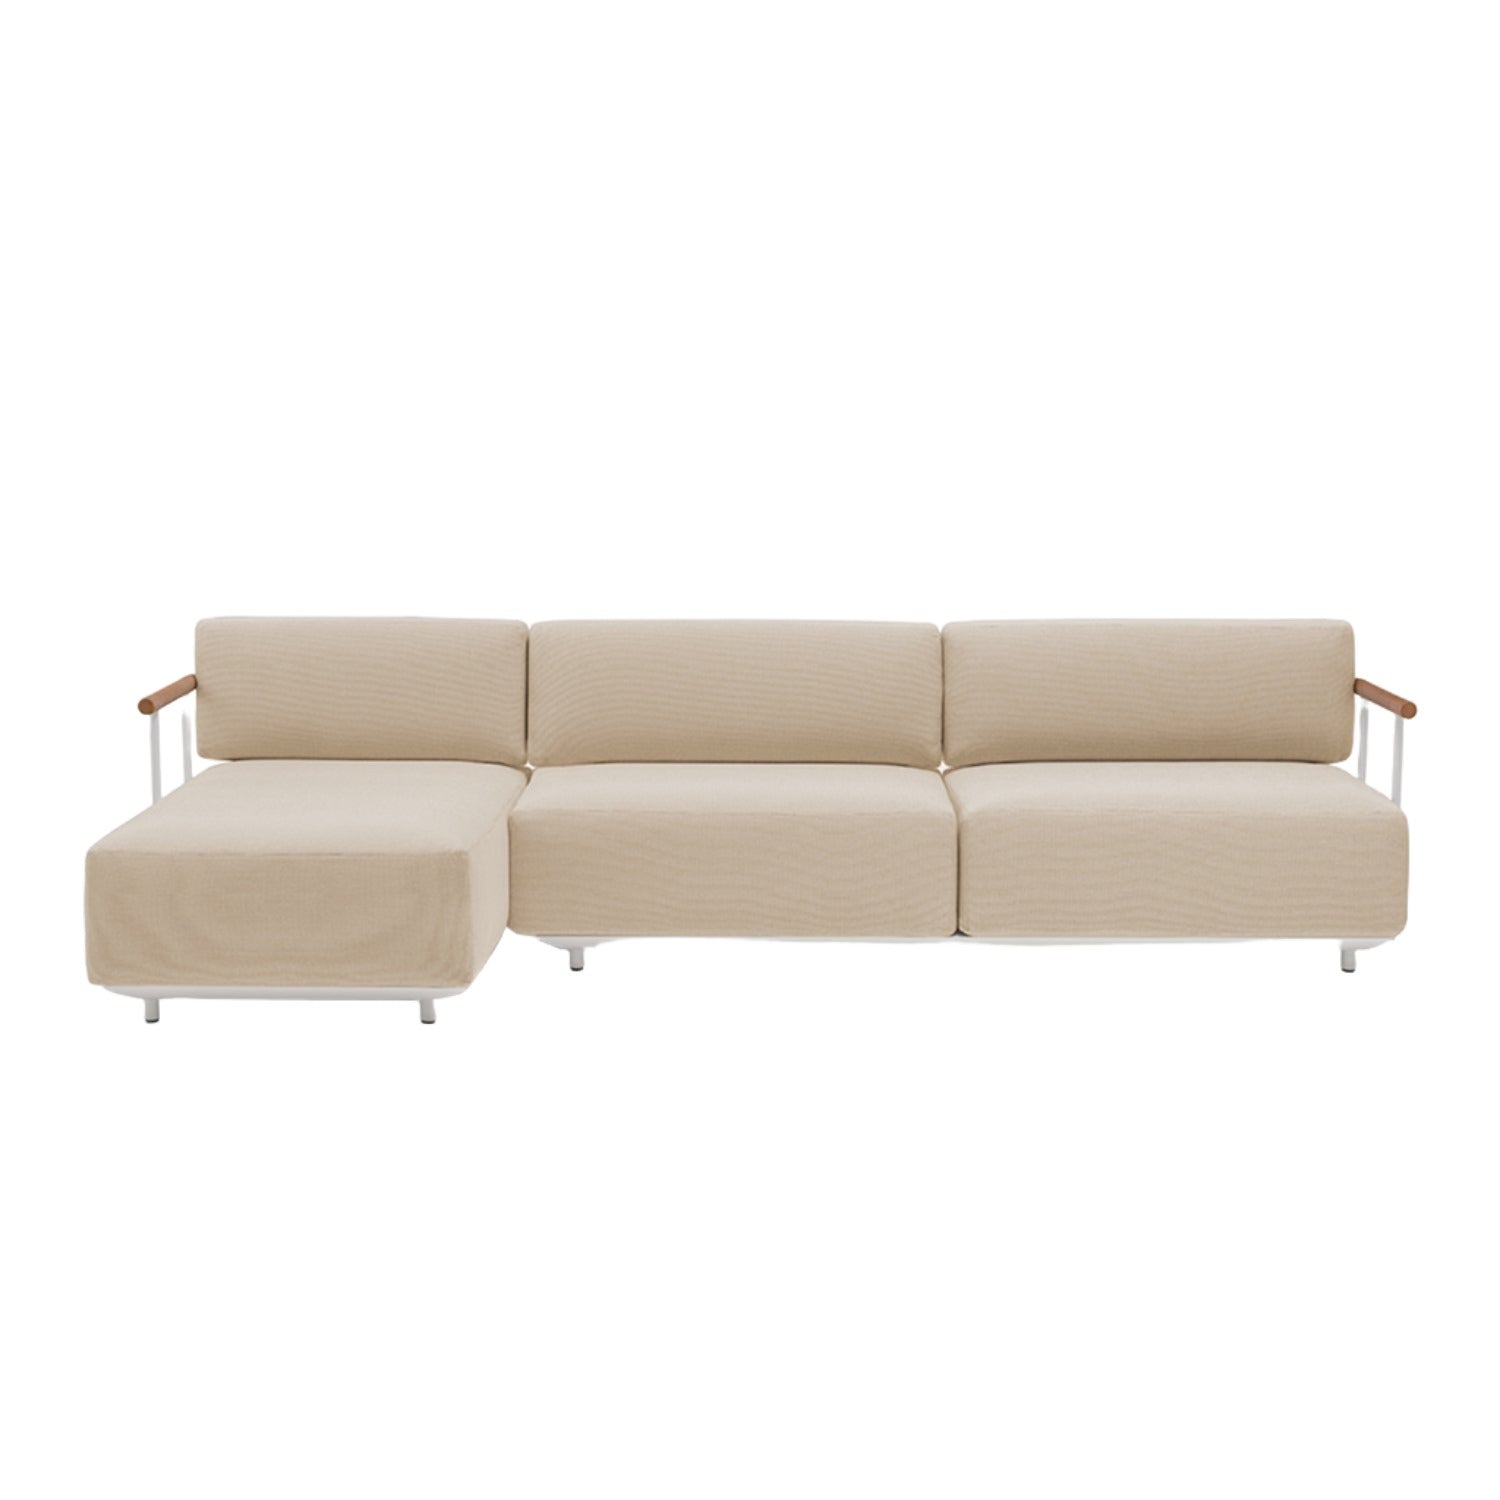 Pedrali Arki Outdoor 3 Seater Sofa in beige